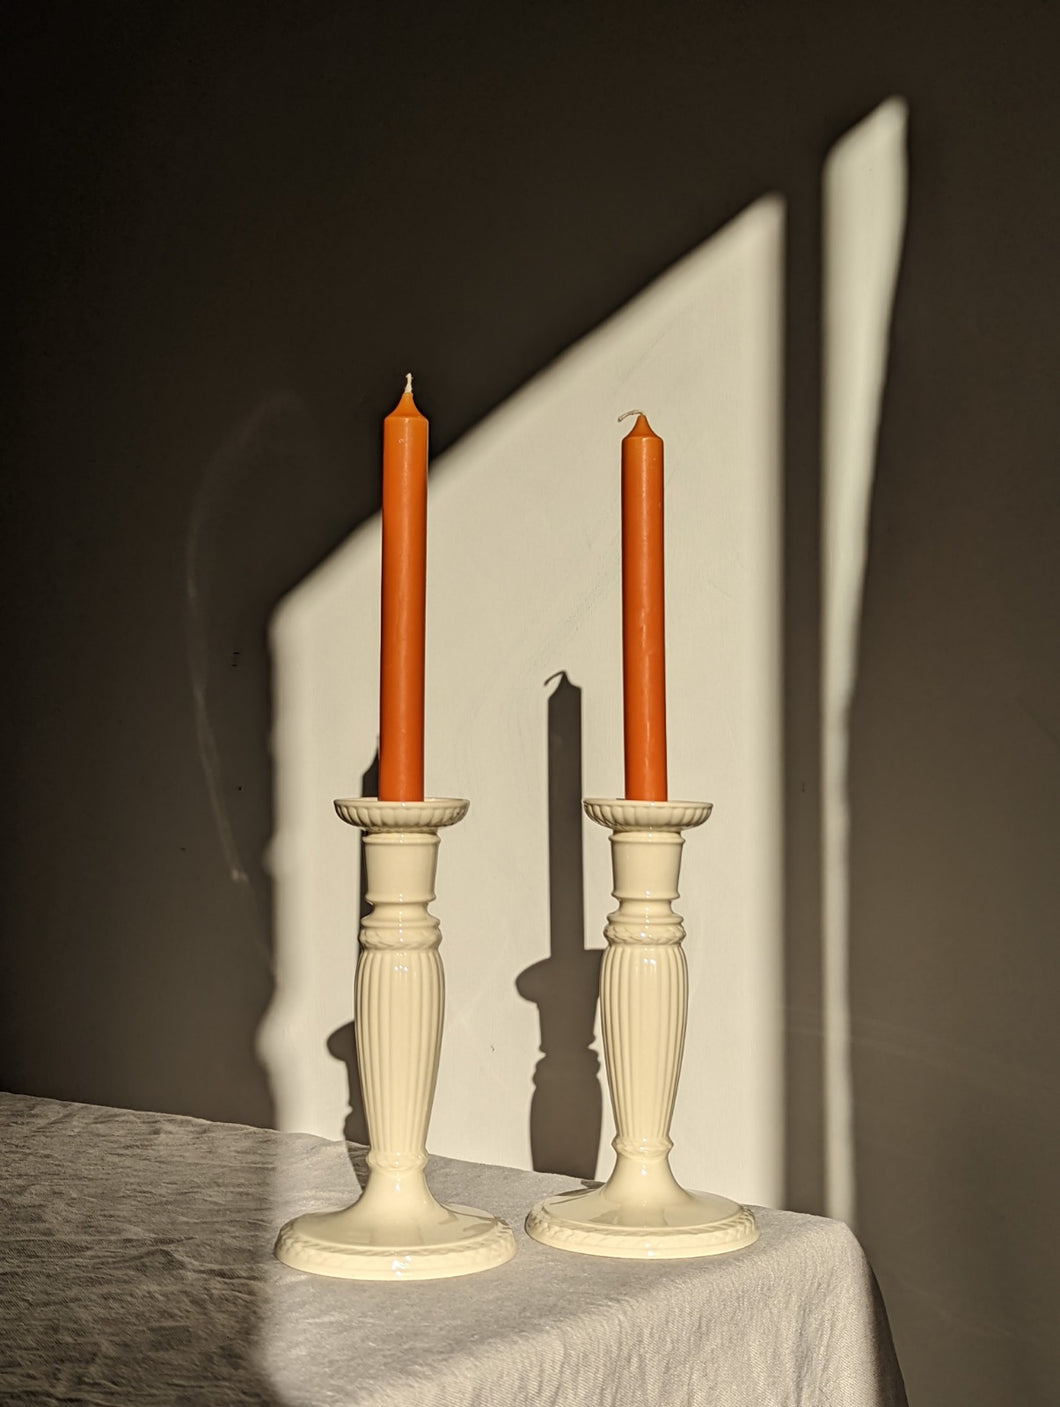 Pair of ceramic Wedgewood candlestick holders